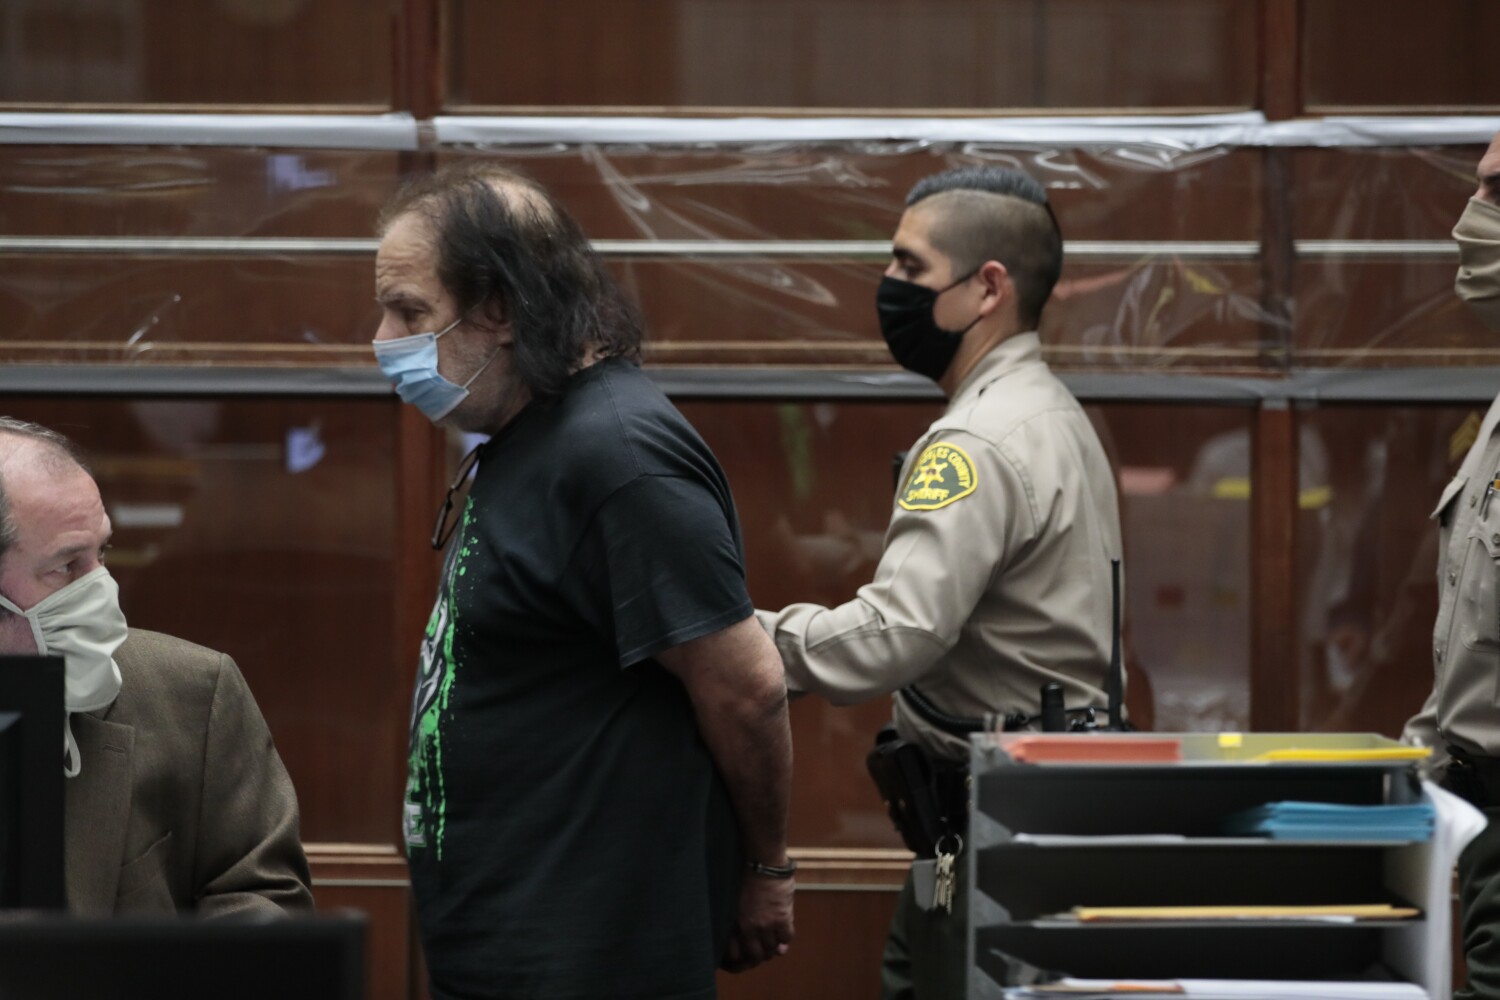 L.A. County prosecutors bring Ron Jeremy sex assault case to grand jury